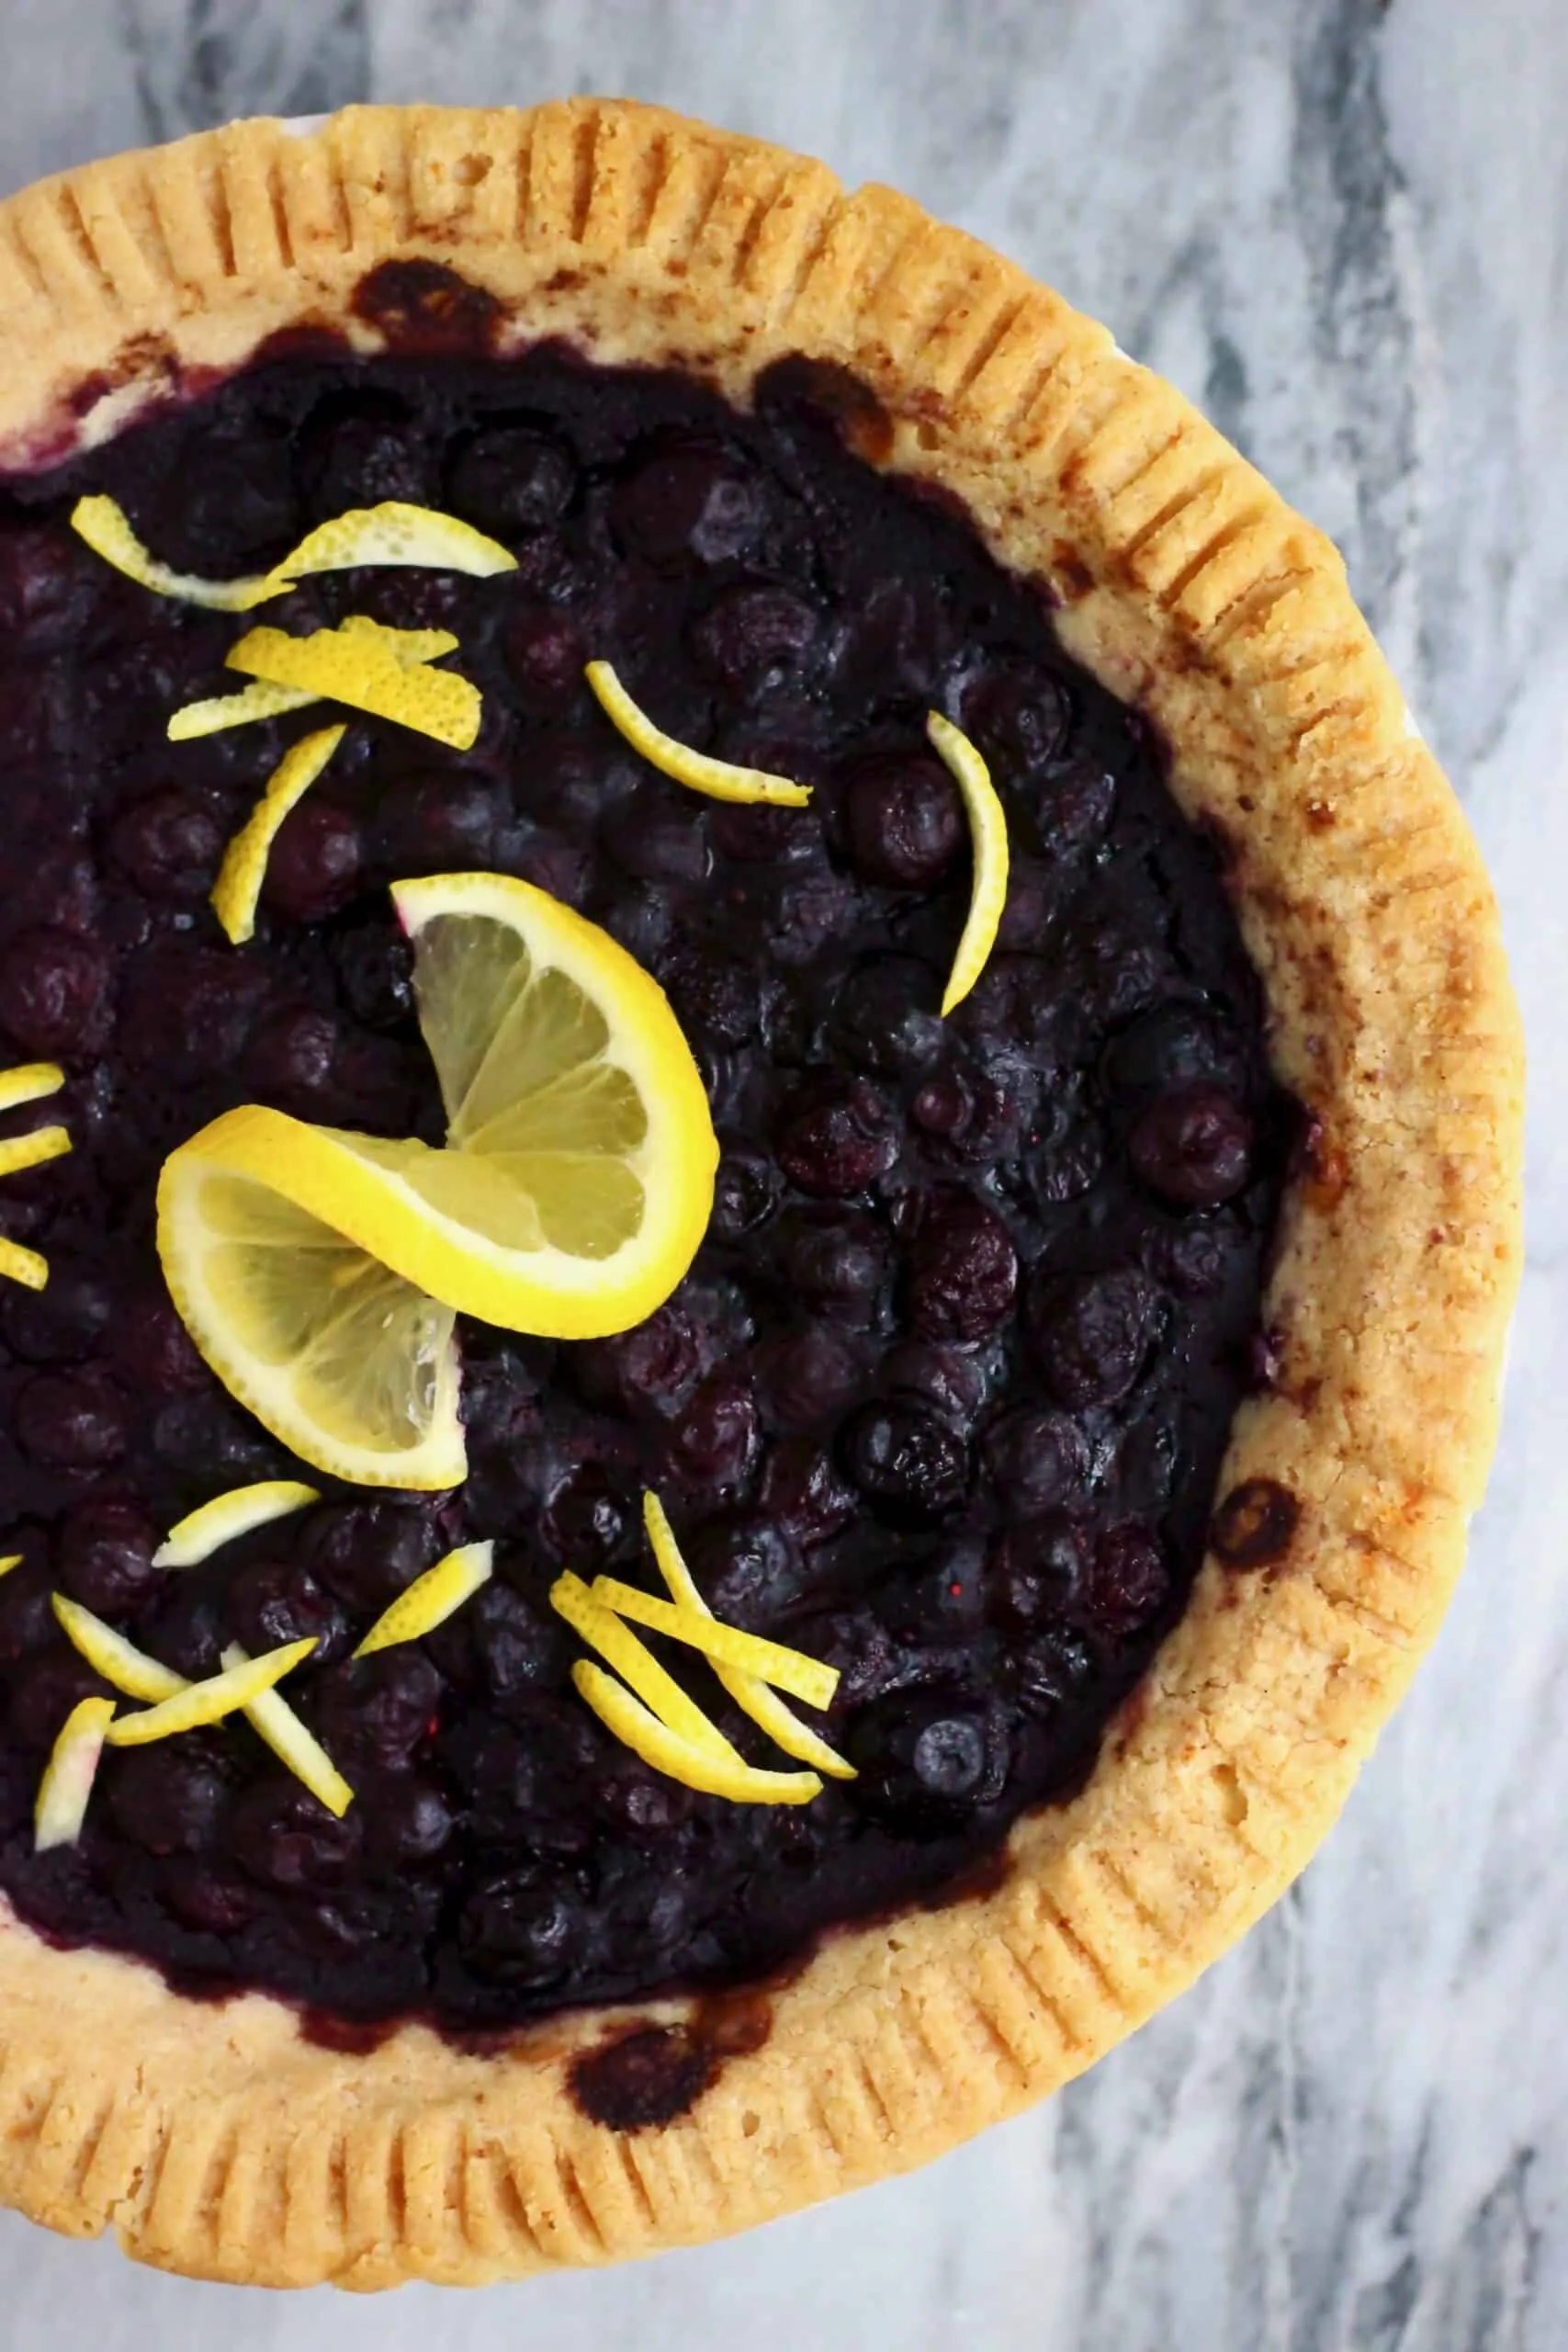 A gluten-free vegan blueberry pie decorated with lemon peel